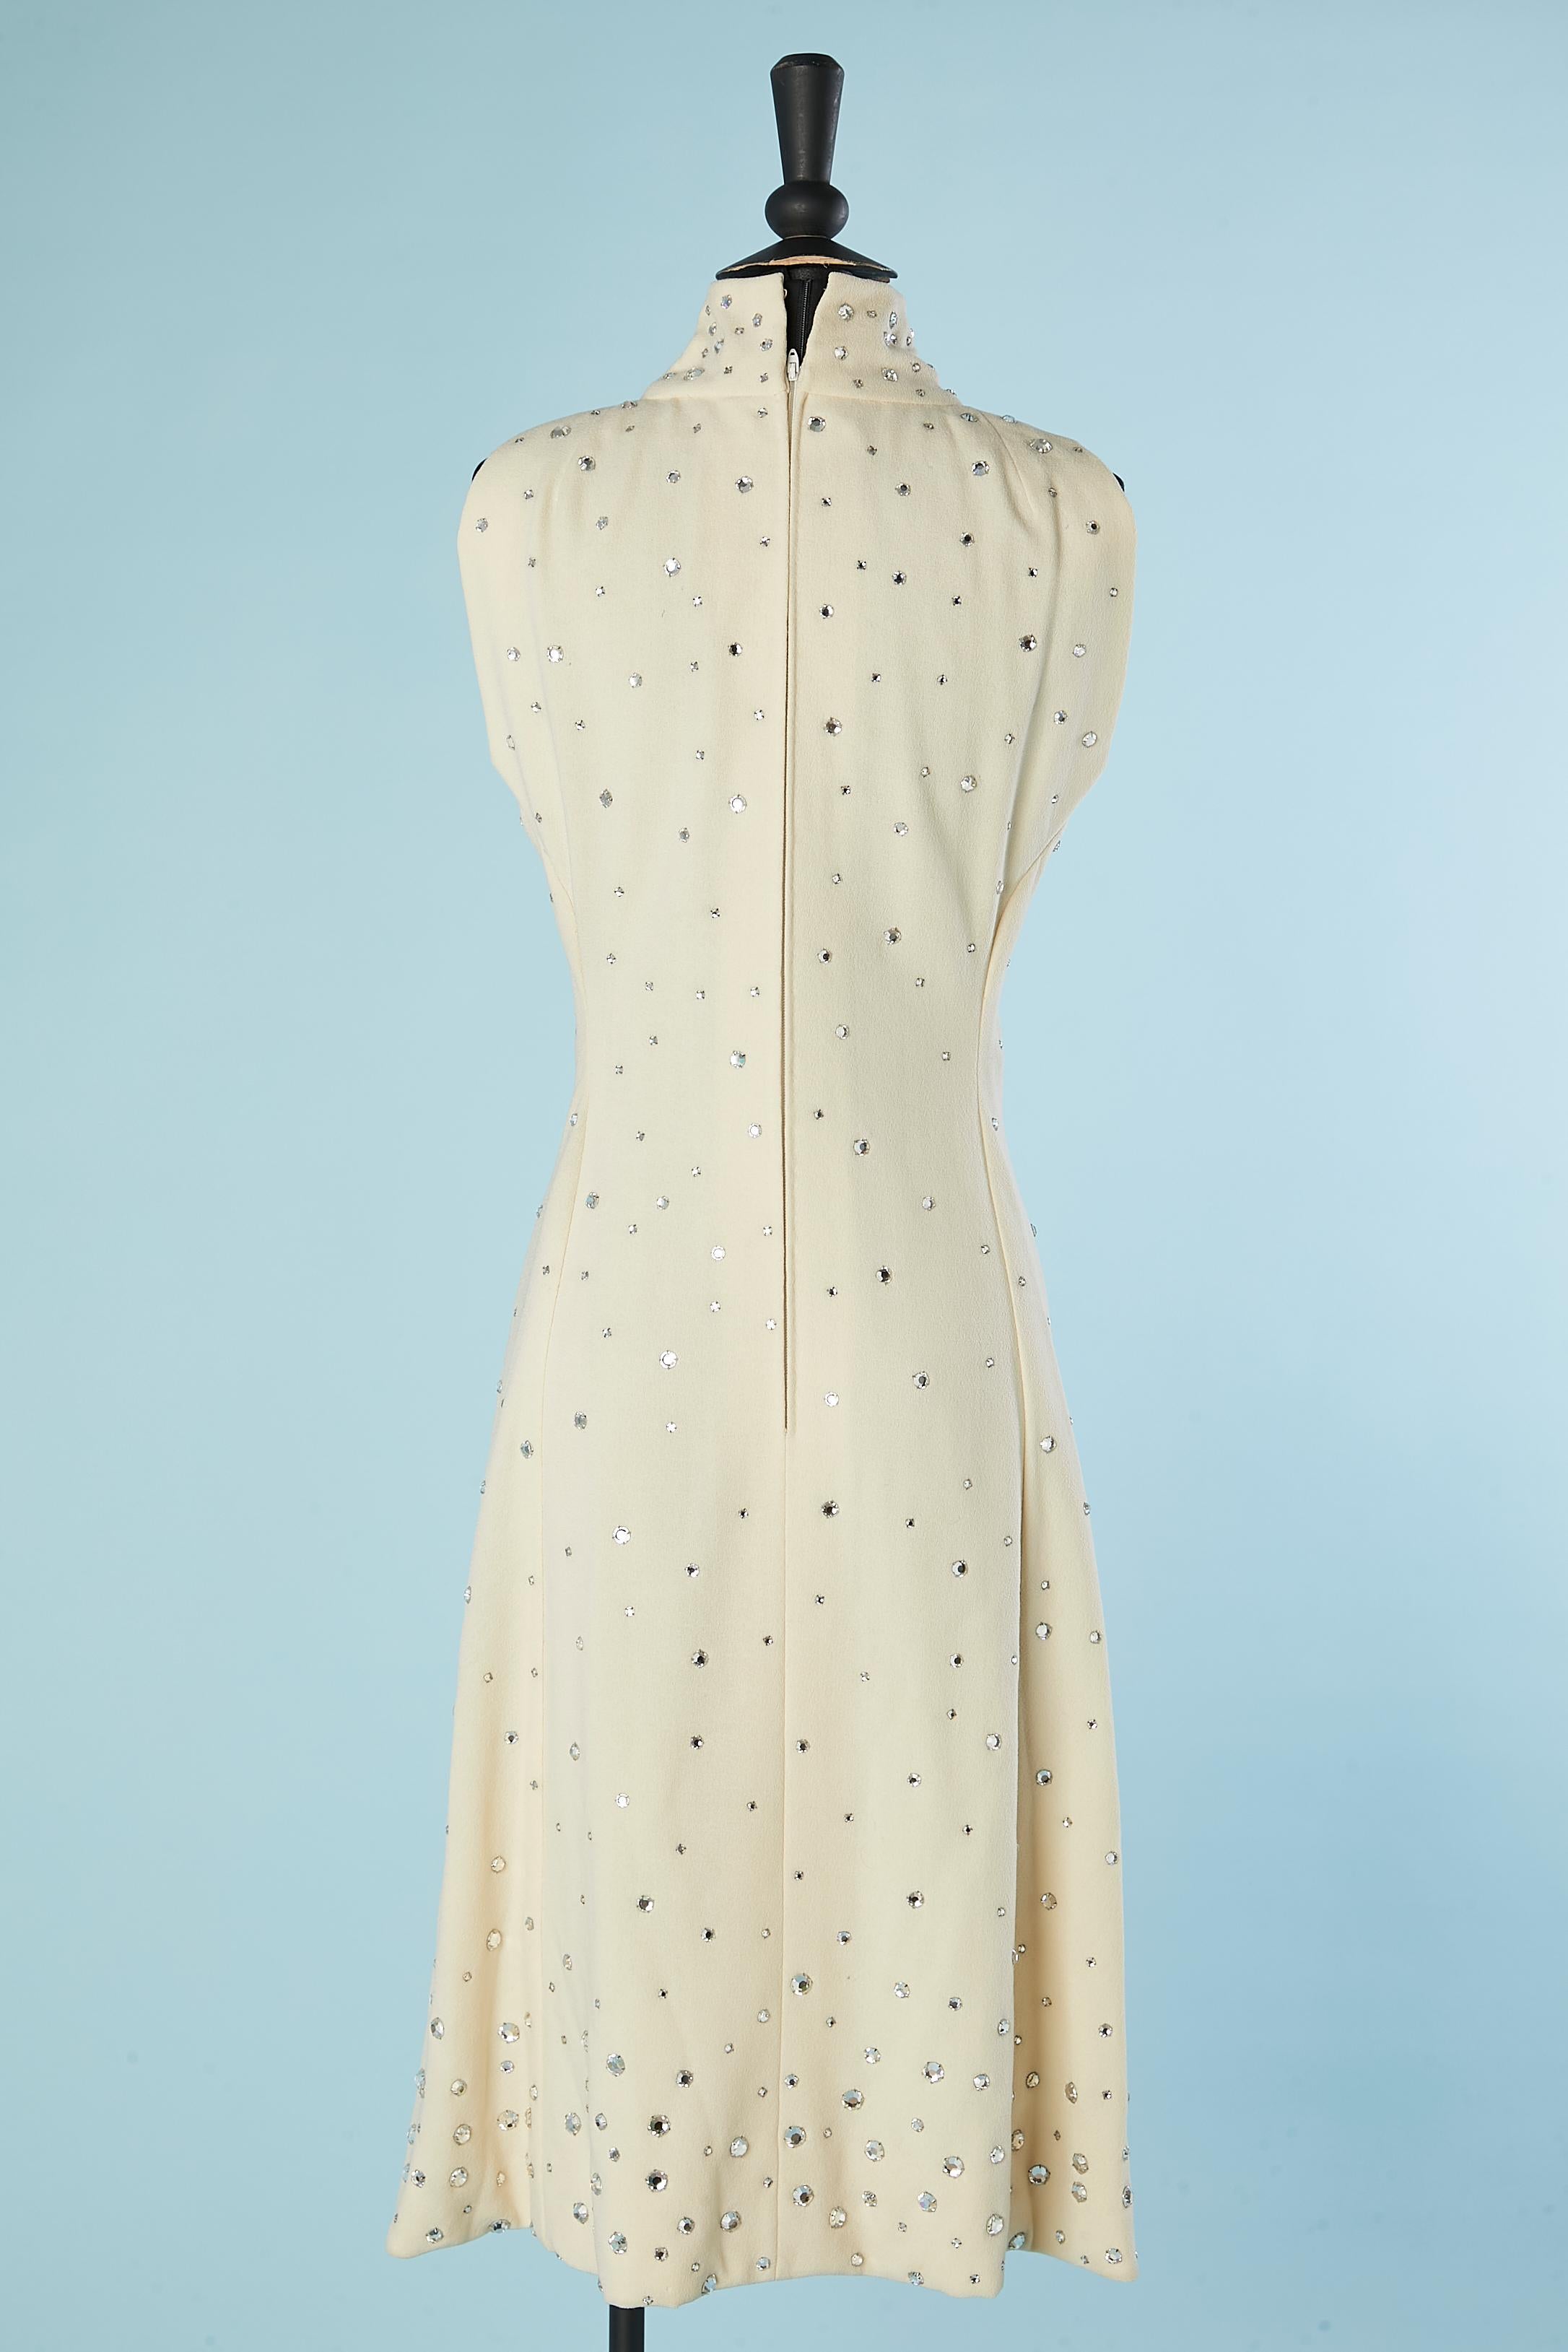 Wool-crêpe sleeveless cocktail dress with rhinestone Pauline Trigère Circa 1960 For Sale 1